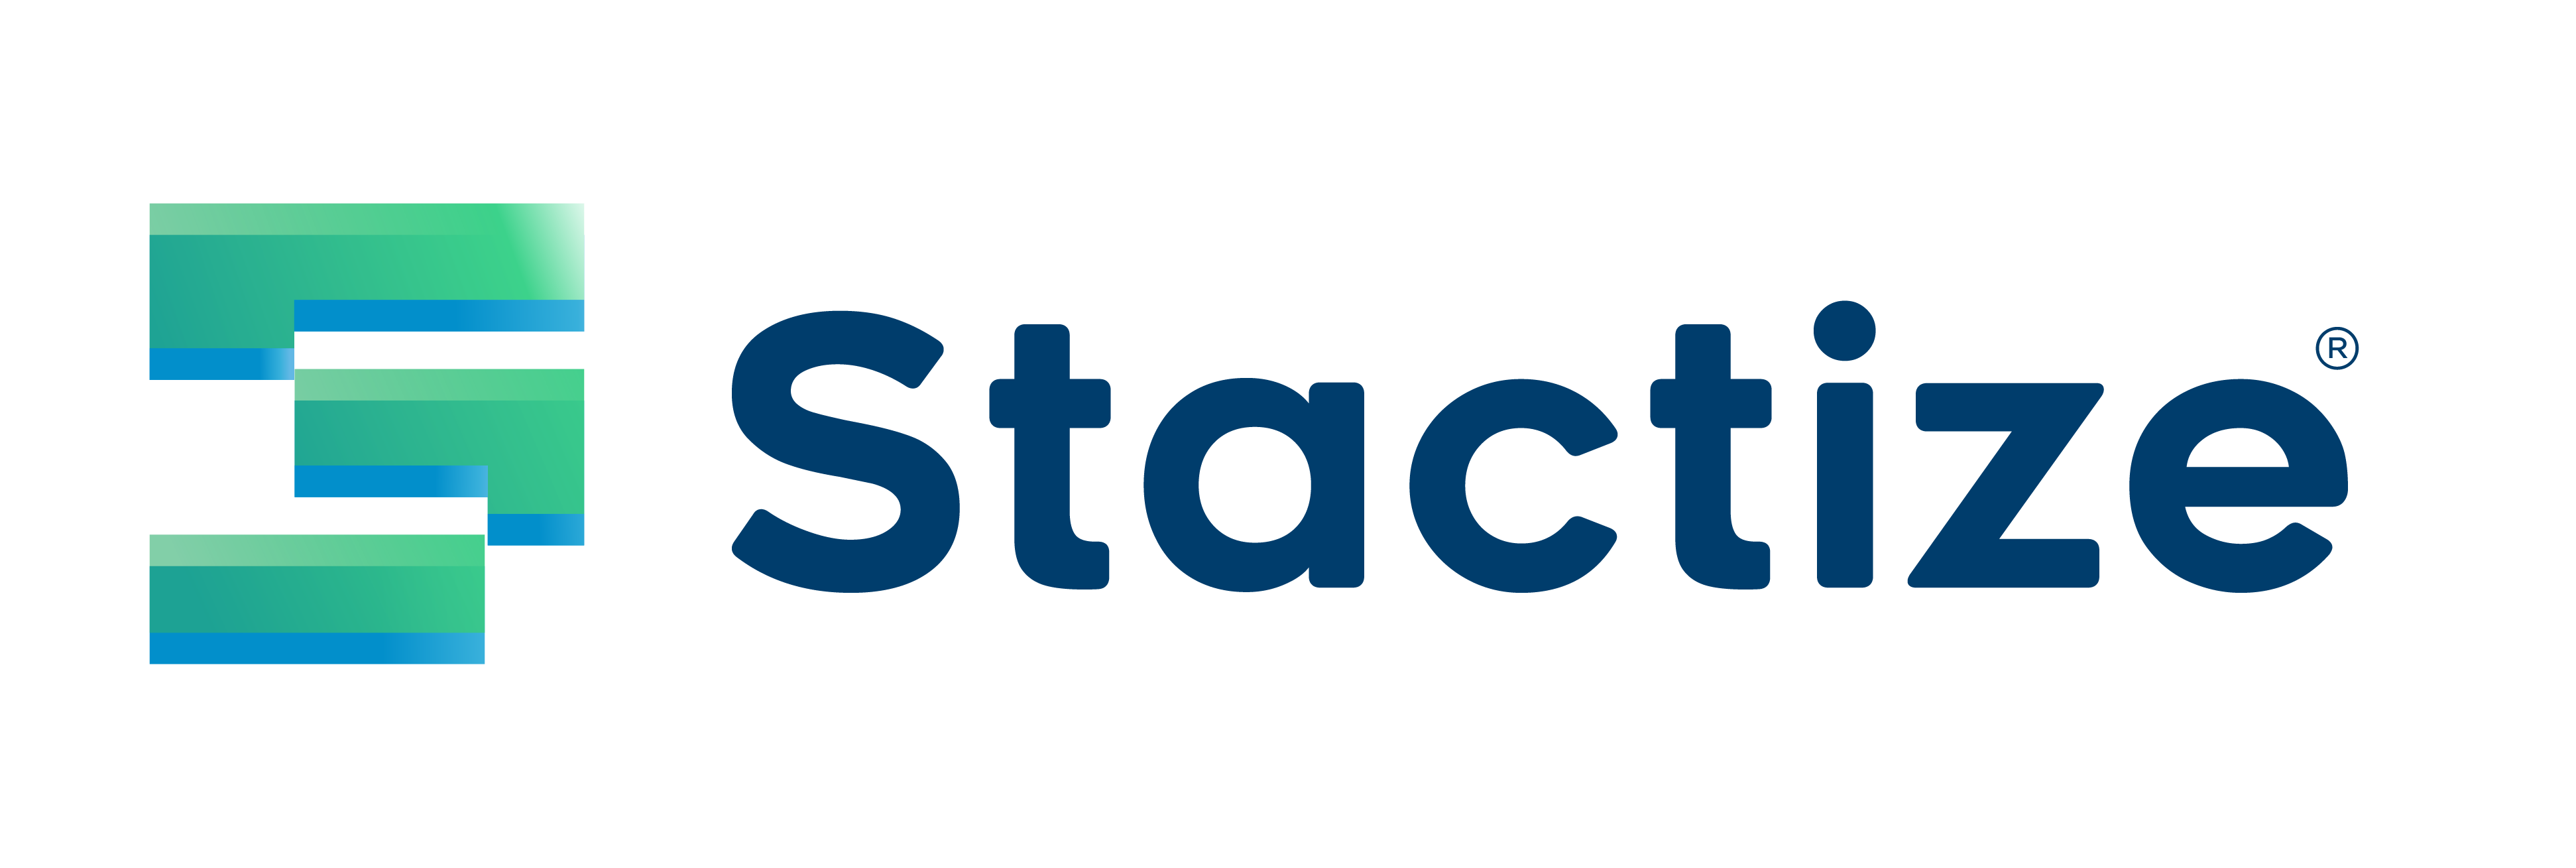 Stactize logo colour-01